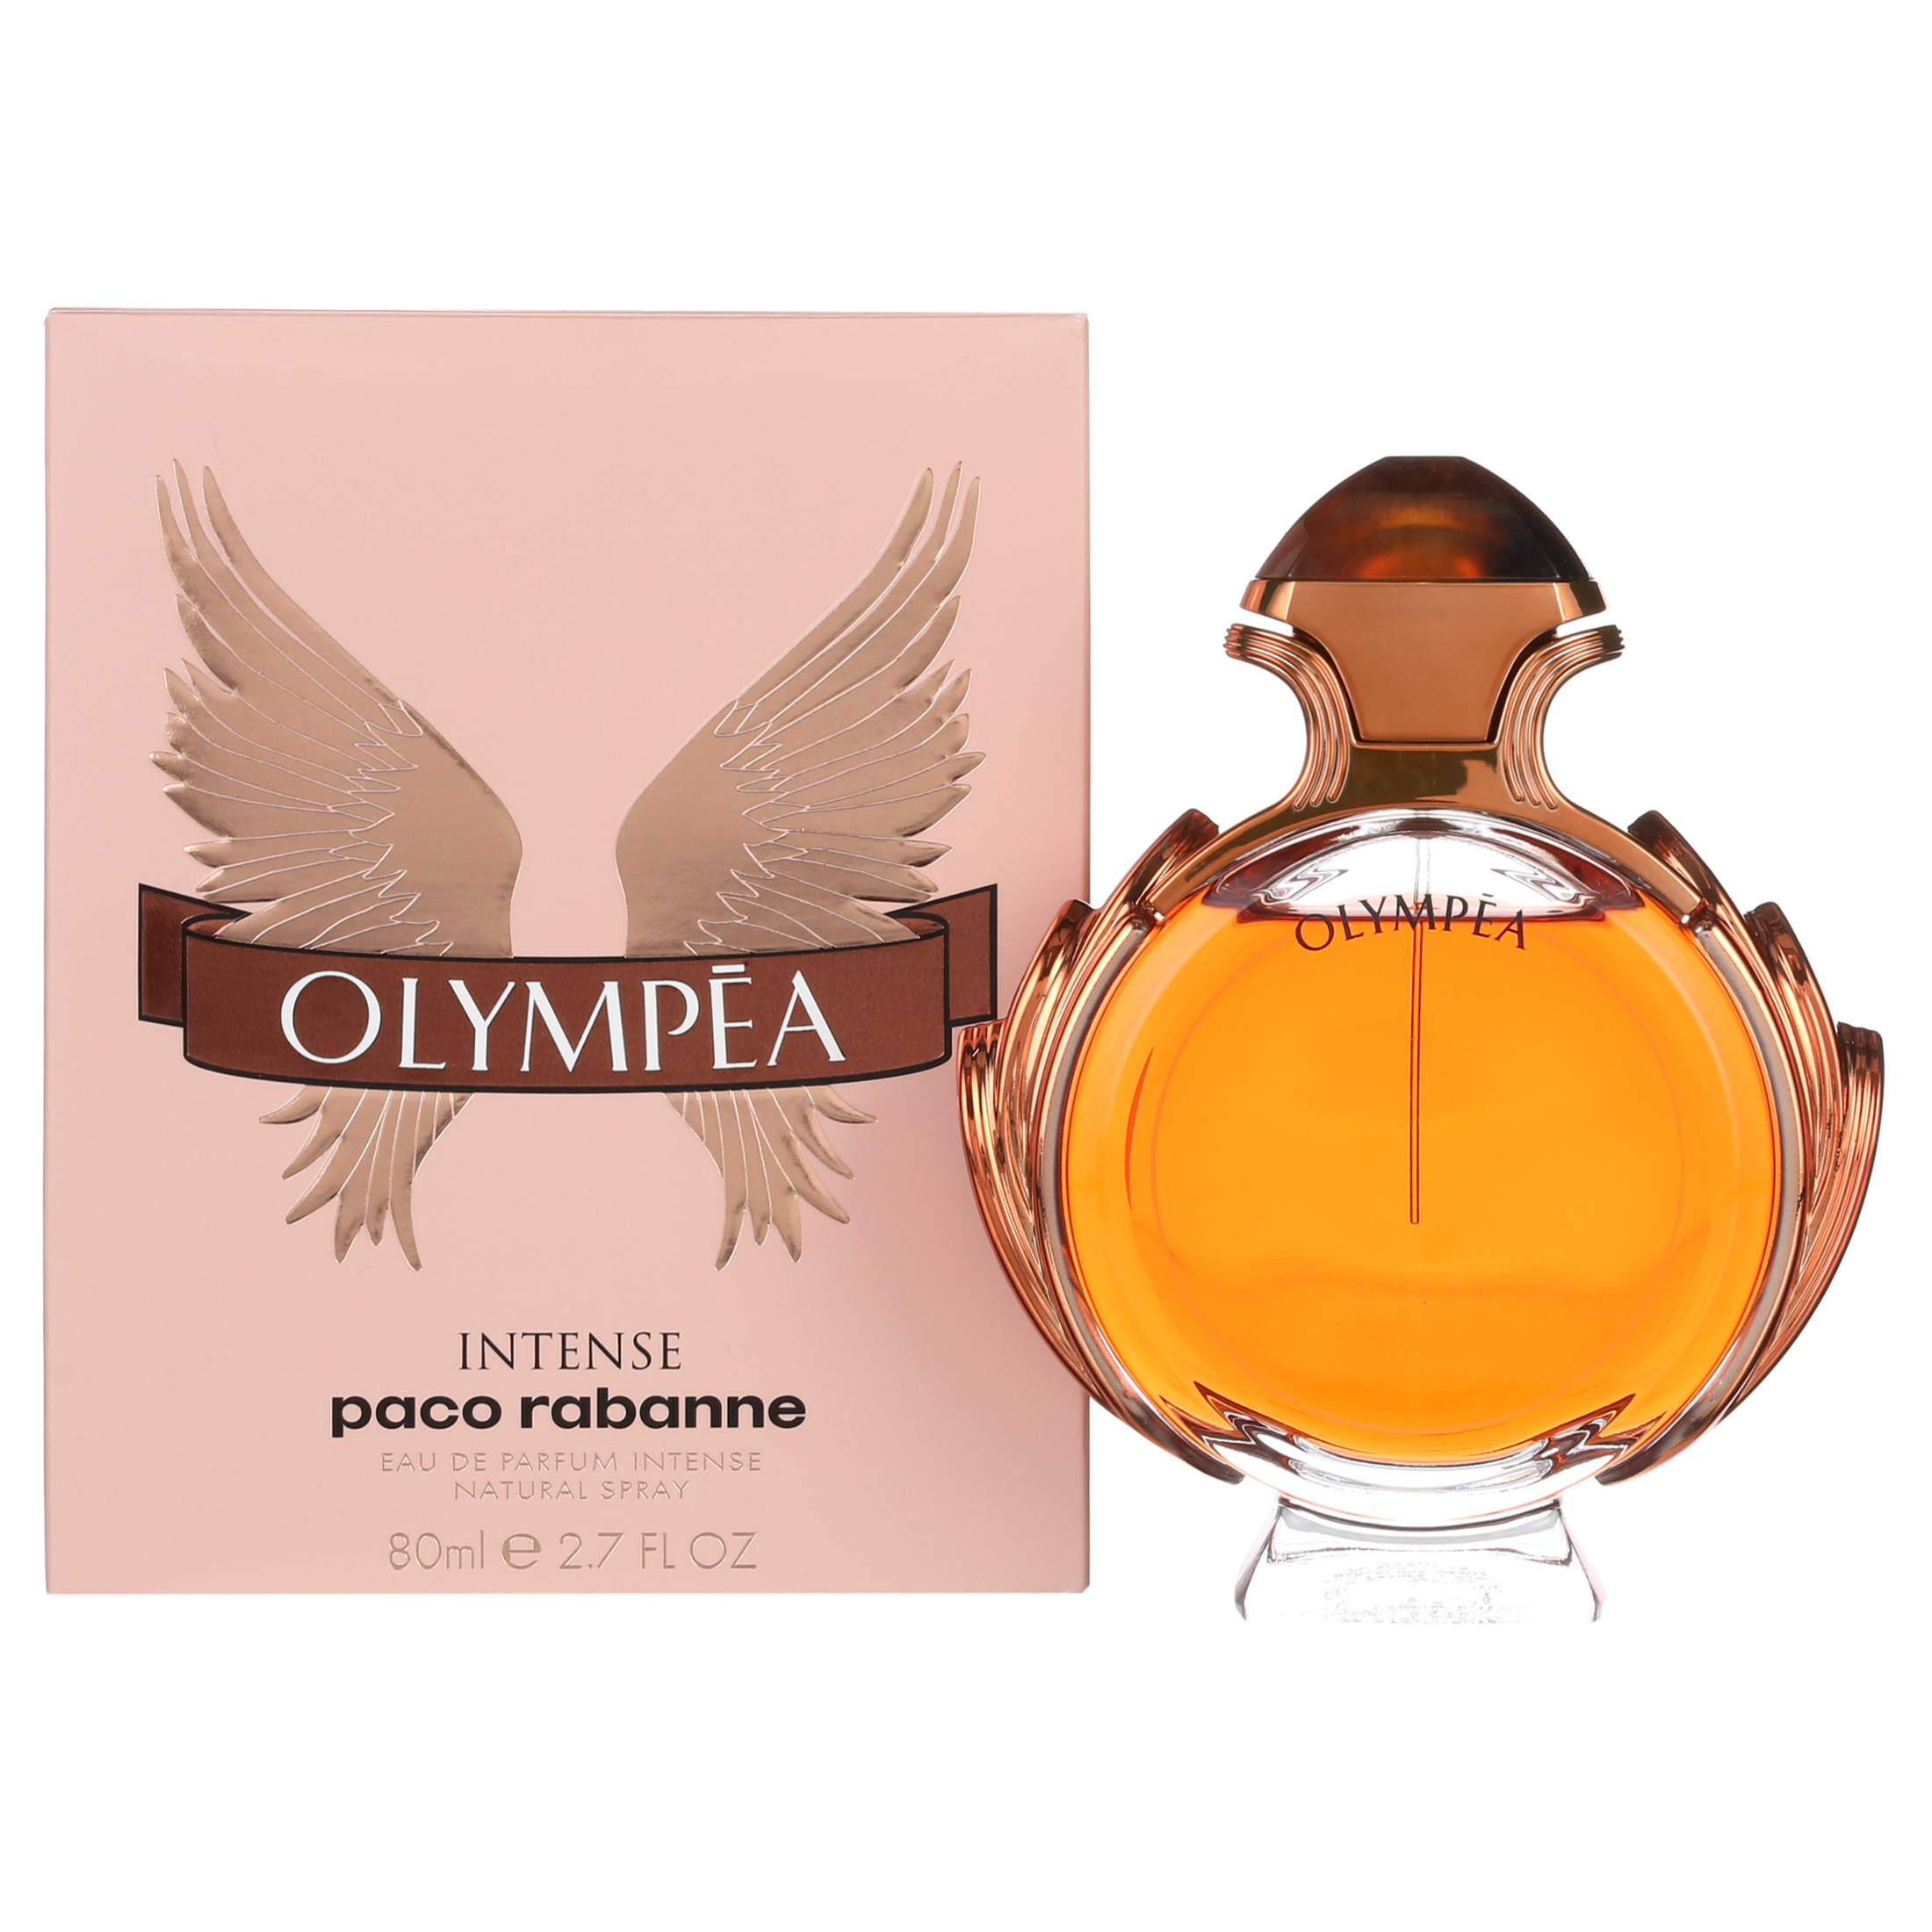 Paco Rabanne Olympea Intense Eau De Parfum Spray for Women 2.7 oz - image 9 of 9